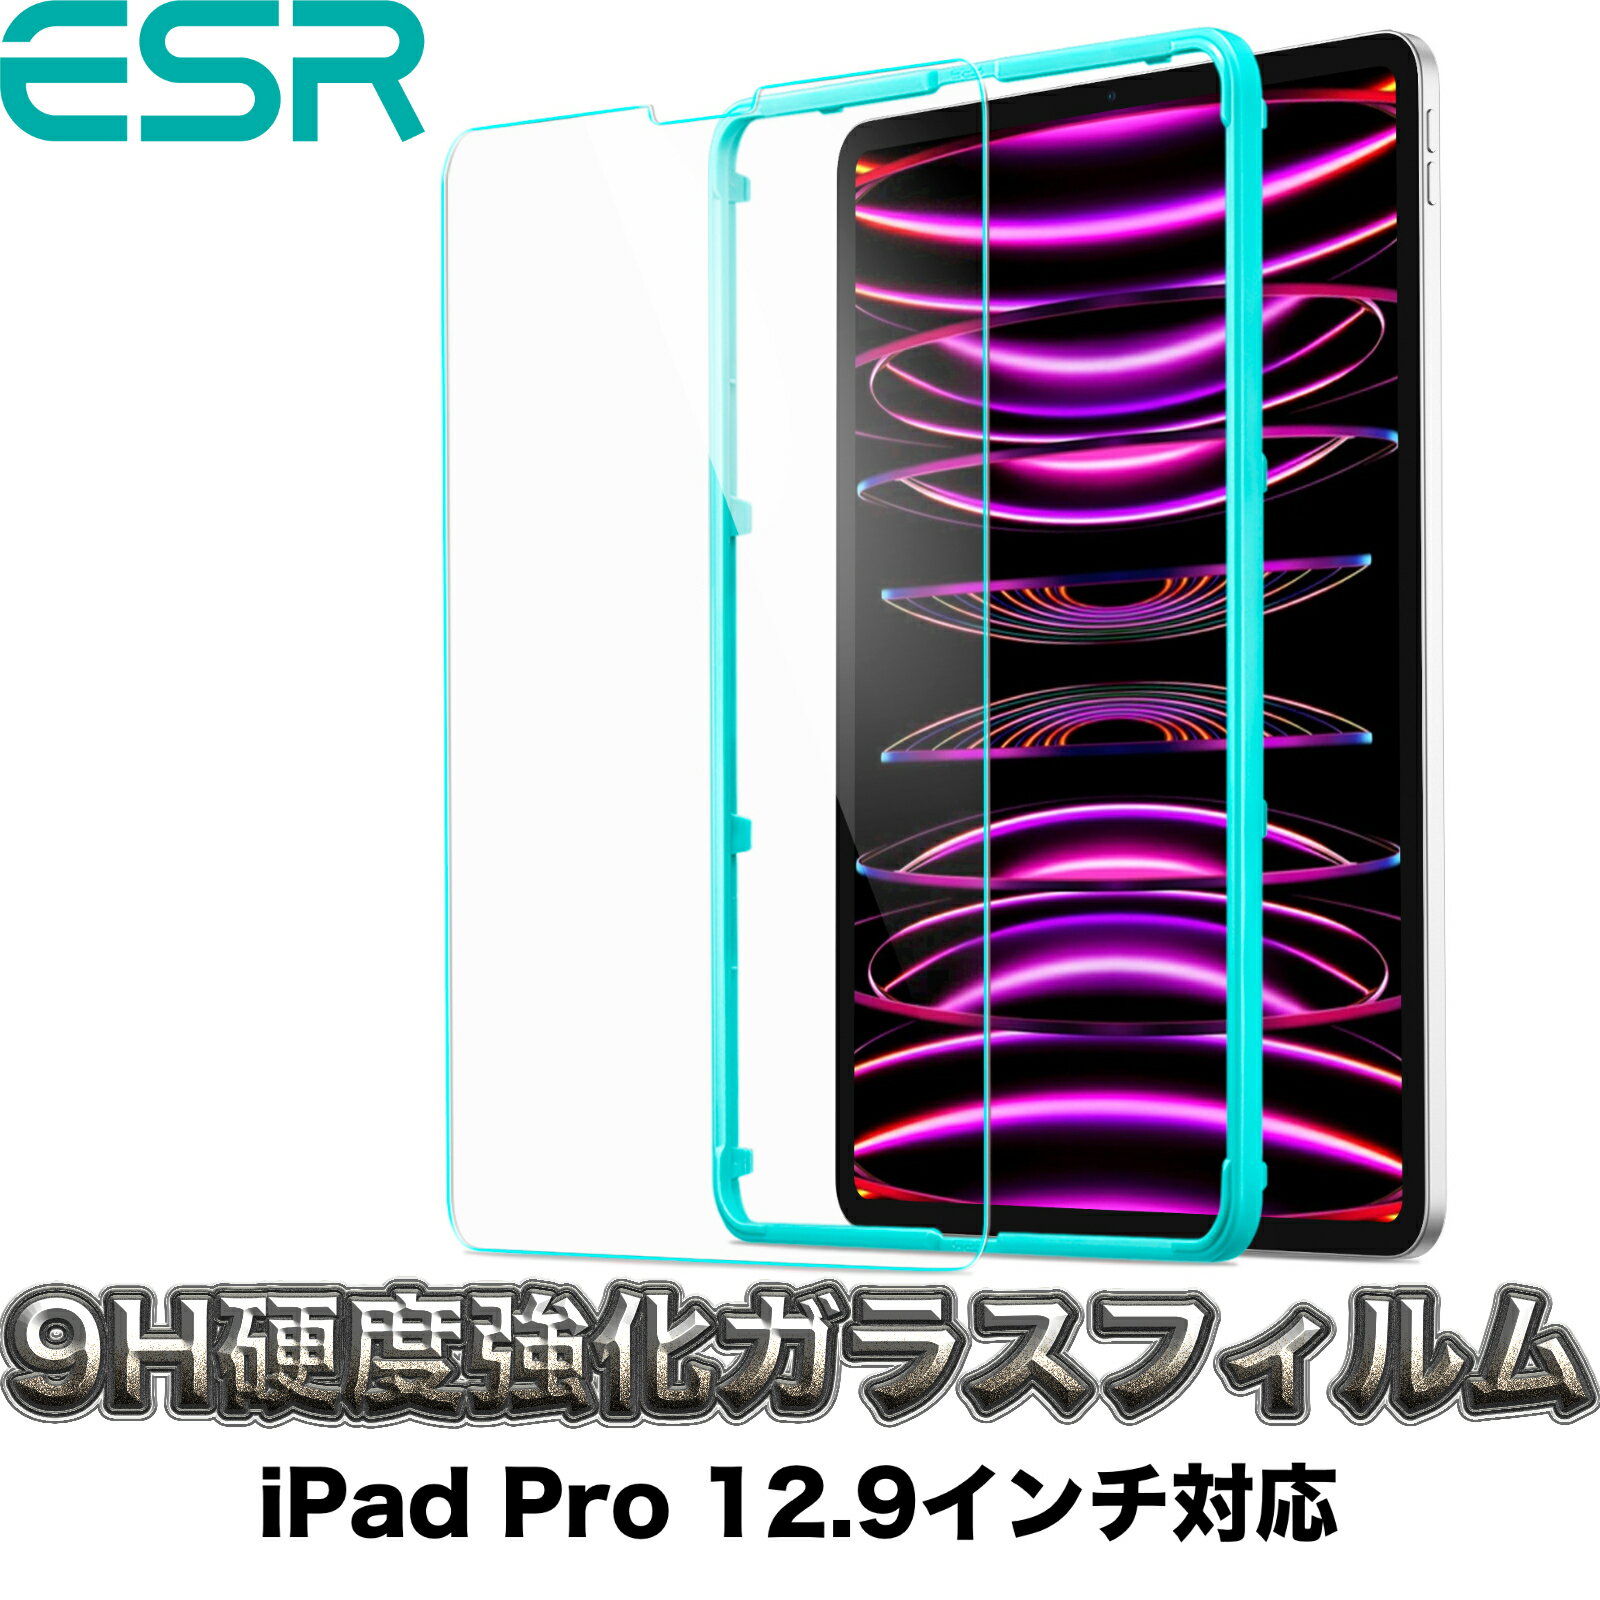 ESR ガラスフィルム iPad Pro 12.9インチ (2022/2021/2020/2018) 対応 強化ガラスフィルム 取り付けフレーム付き 傷防止 HDクラリティ ESR Premium Clear 9H Tempered Glass Screen Protector for iPad Pro 12.9 Clear